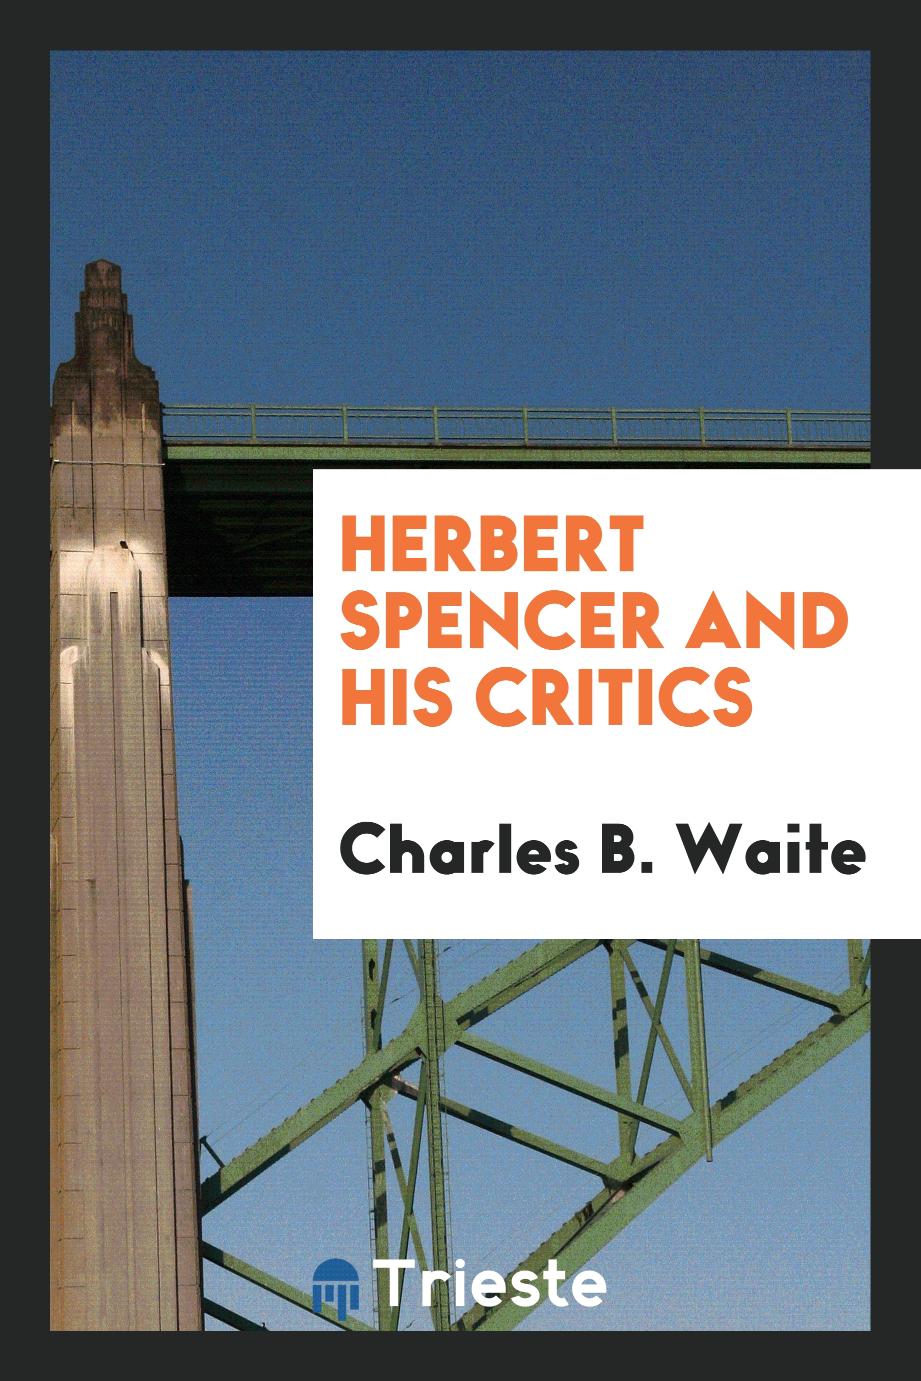 Herbert Spencer and his critics